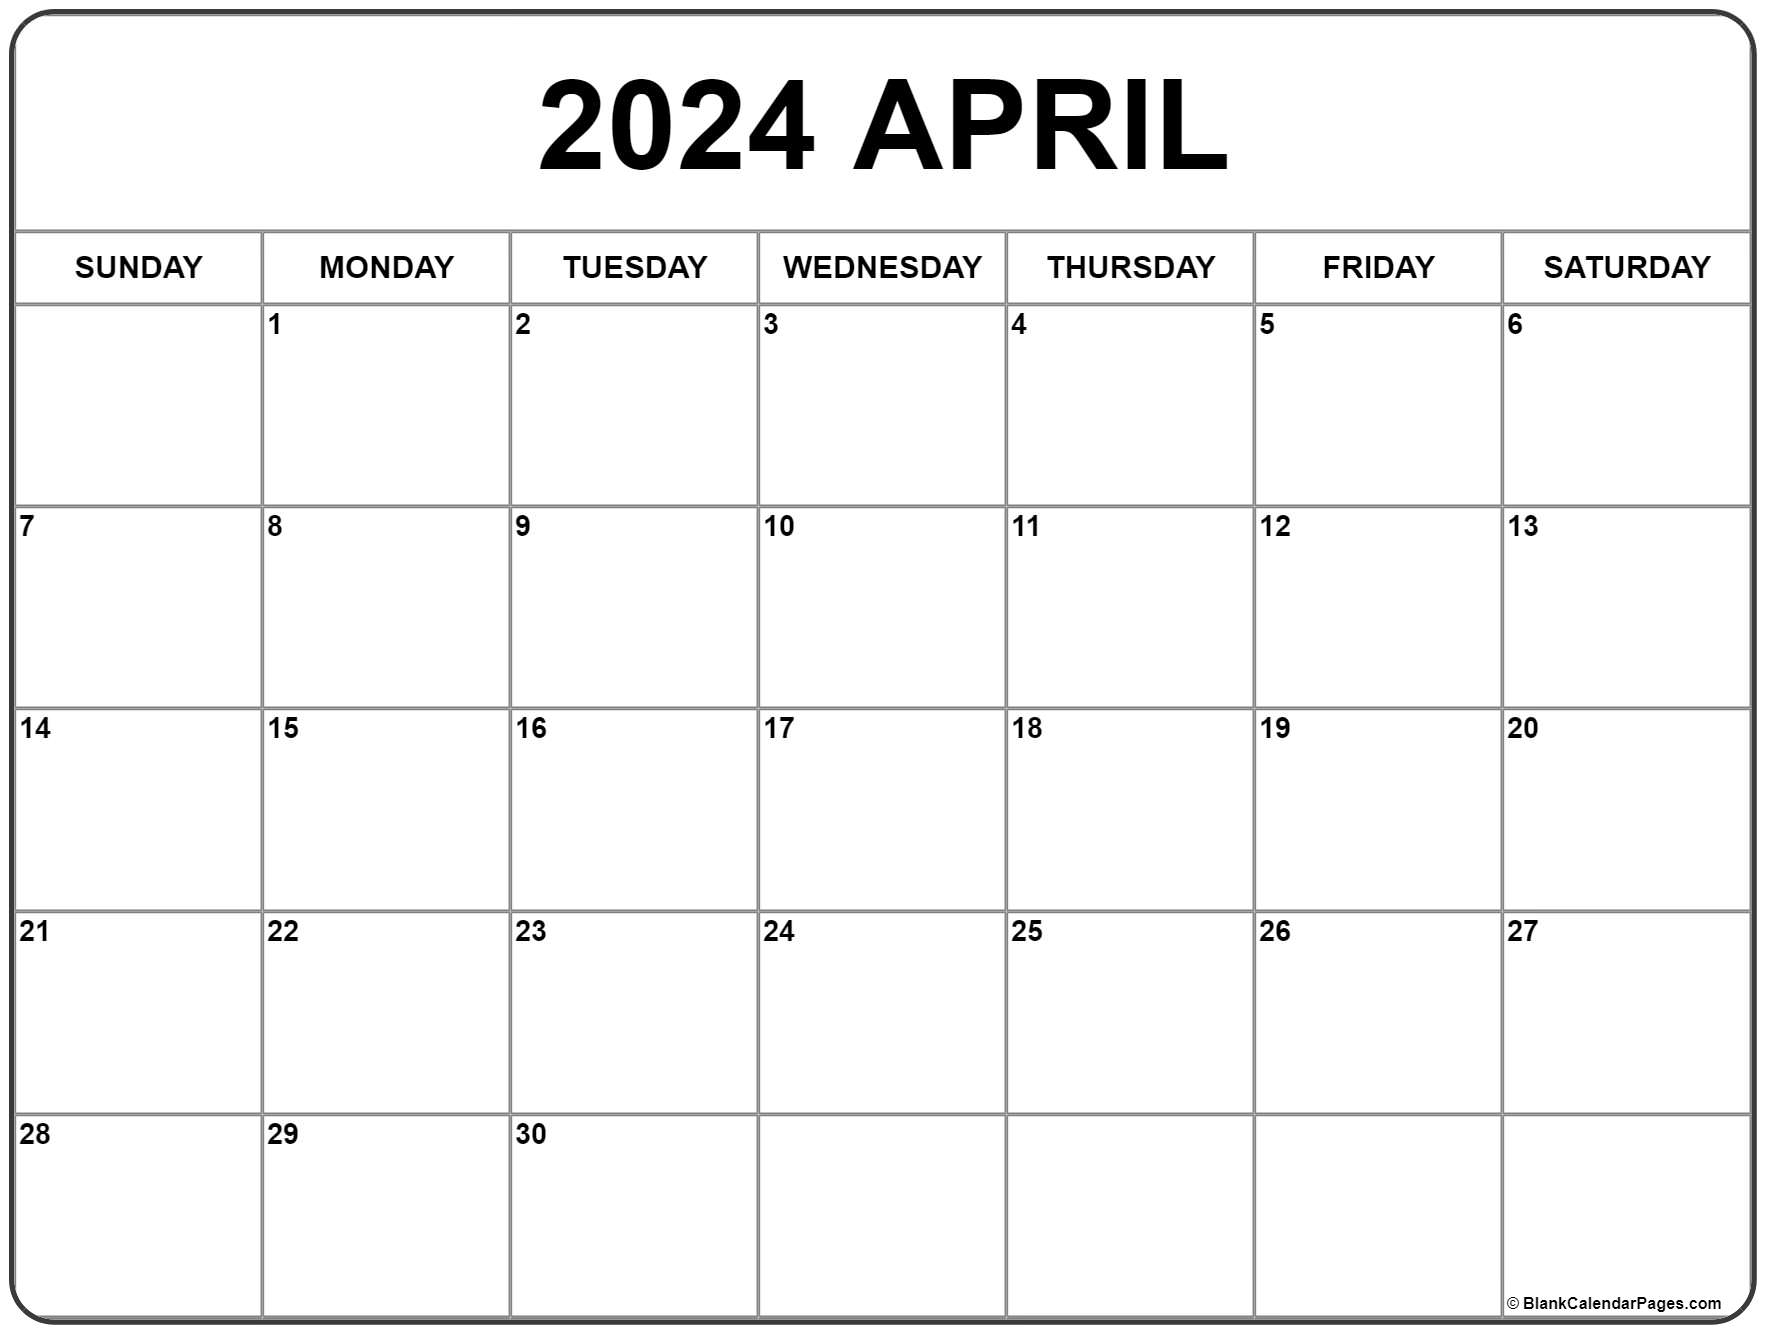 April 2024 Calendar | Free Printable Calendar intended for April 2024 Calendar Word